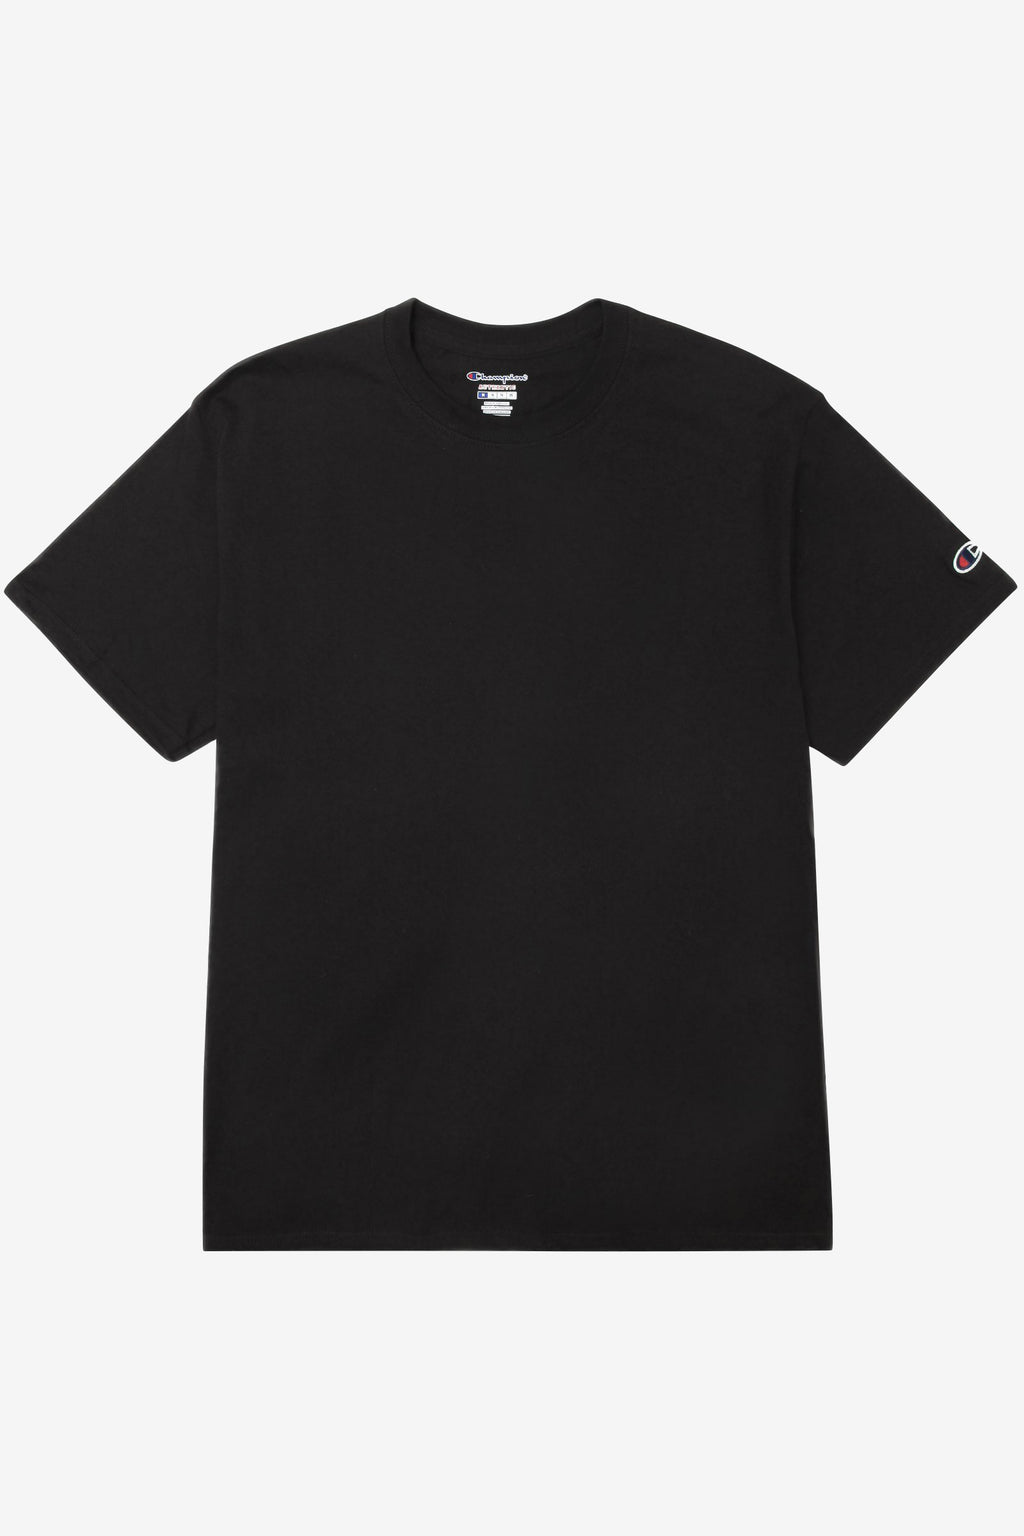 Champion - 6oz Classic T-Shirt - Black